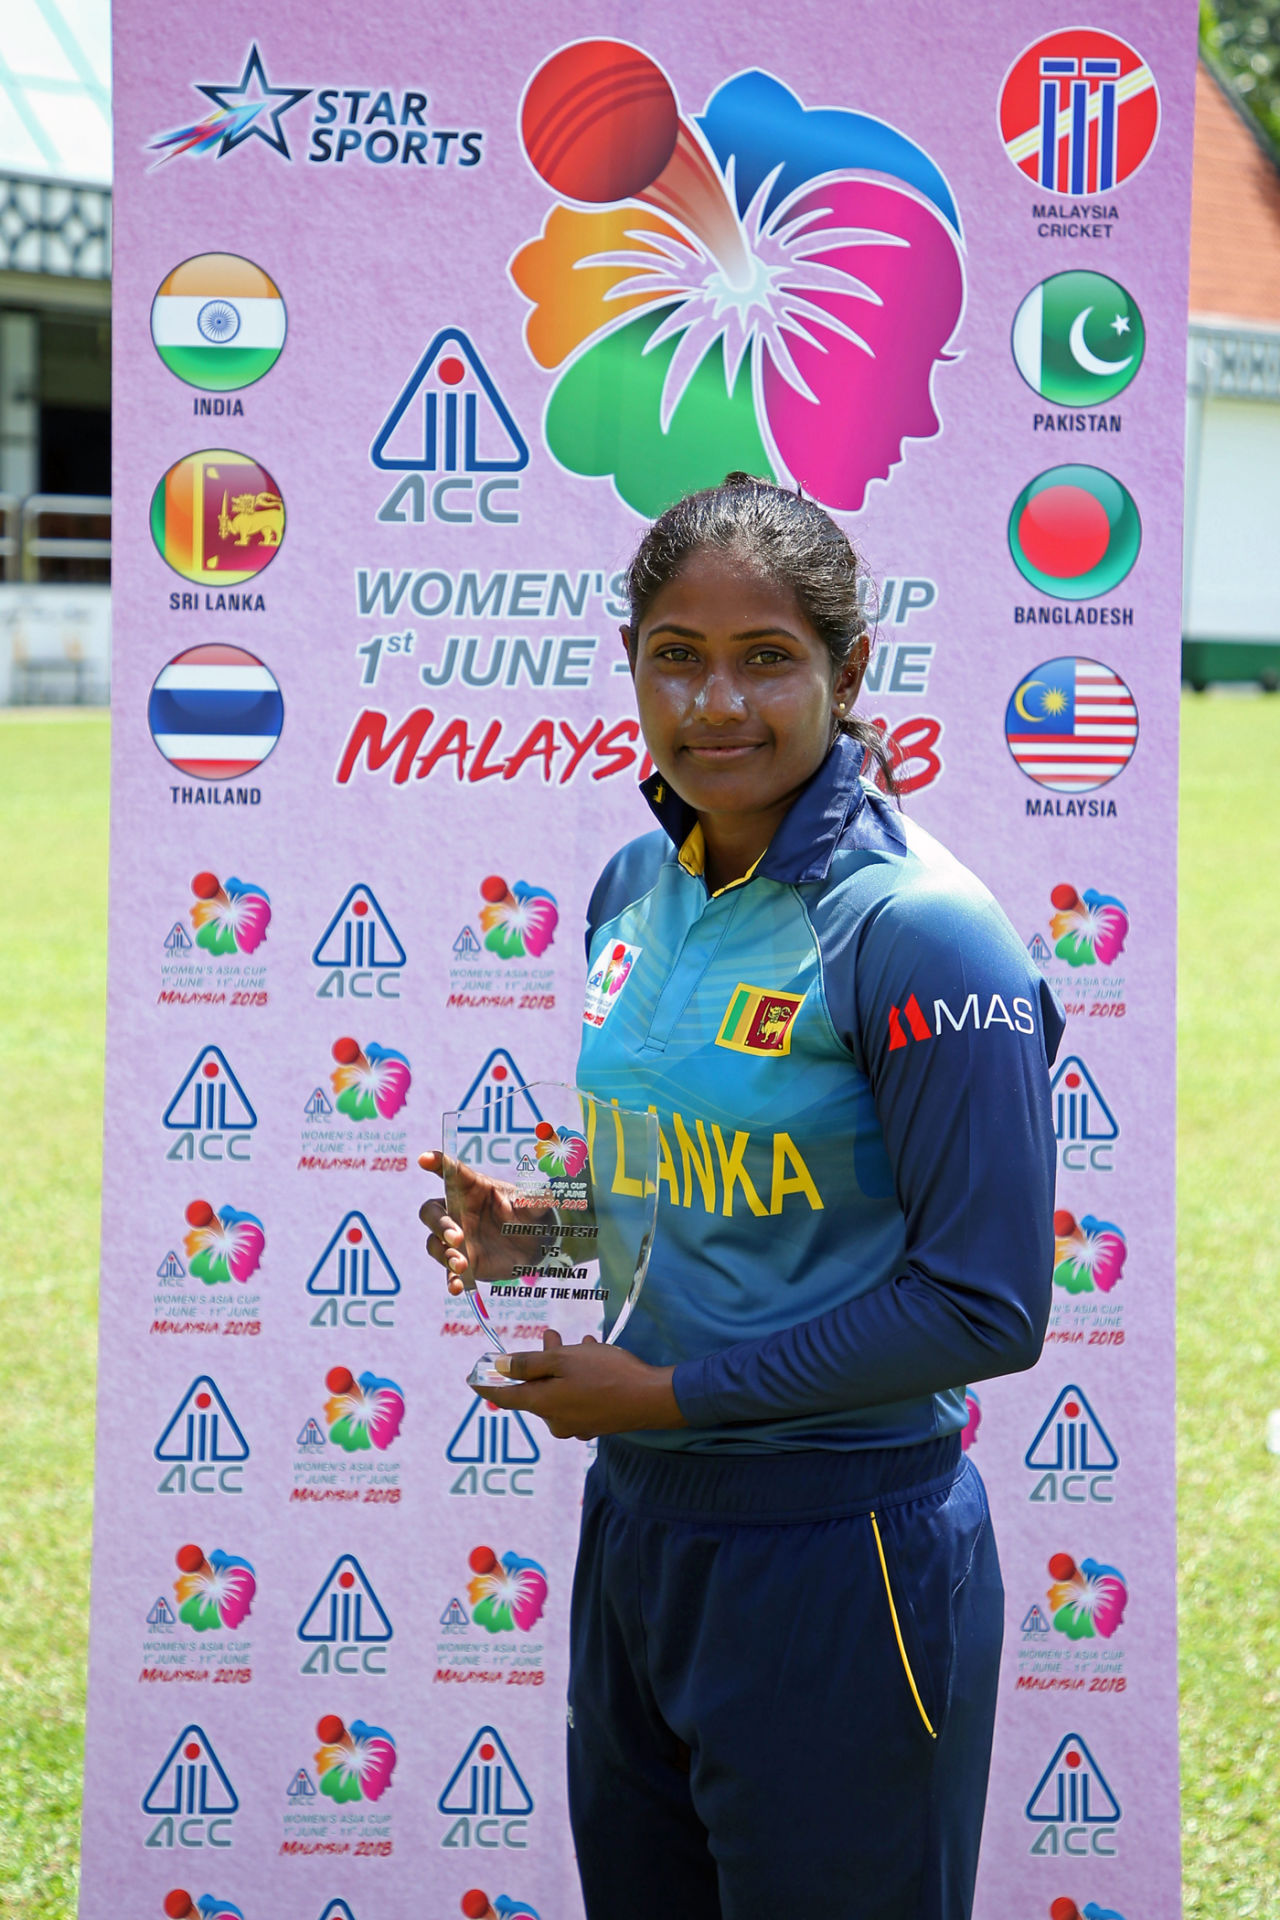 Sugandika Kumari poses with the Player-of-the-Match award, Bangladesh v Sri Lanka, Women's T20 Asia Cup 2018, May 3, 2018, Kuala Lumpur